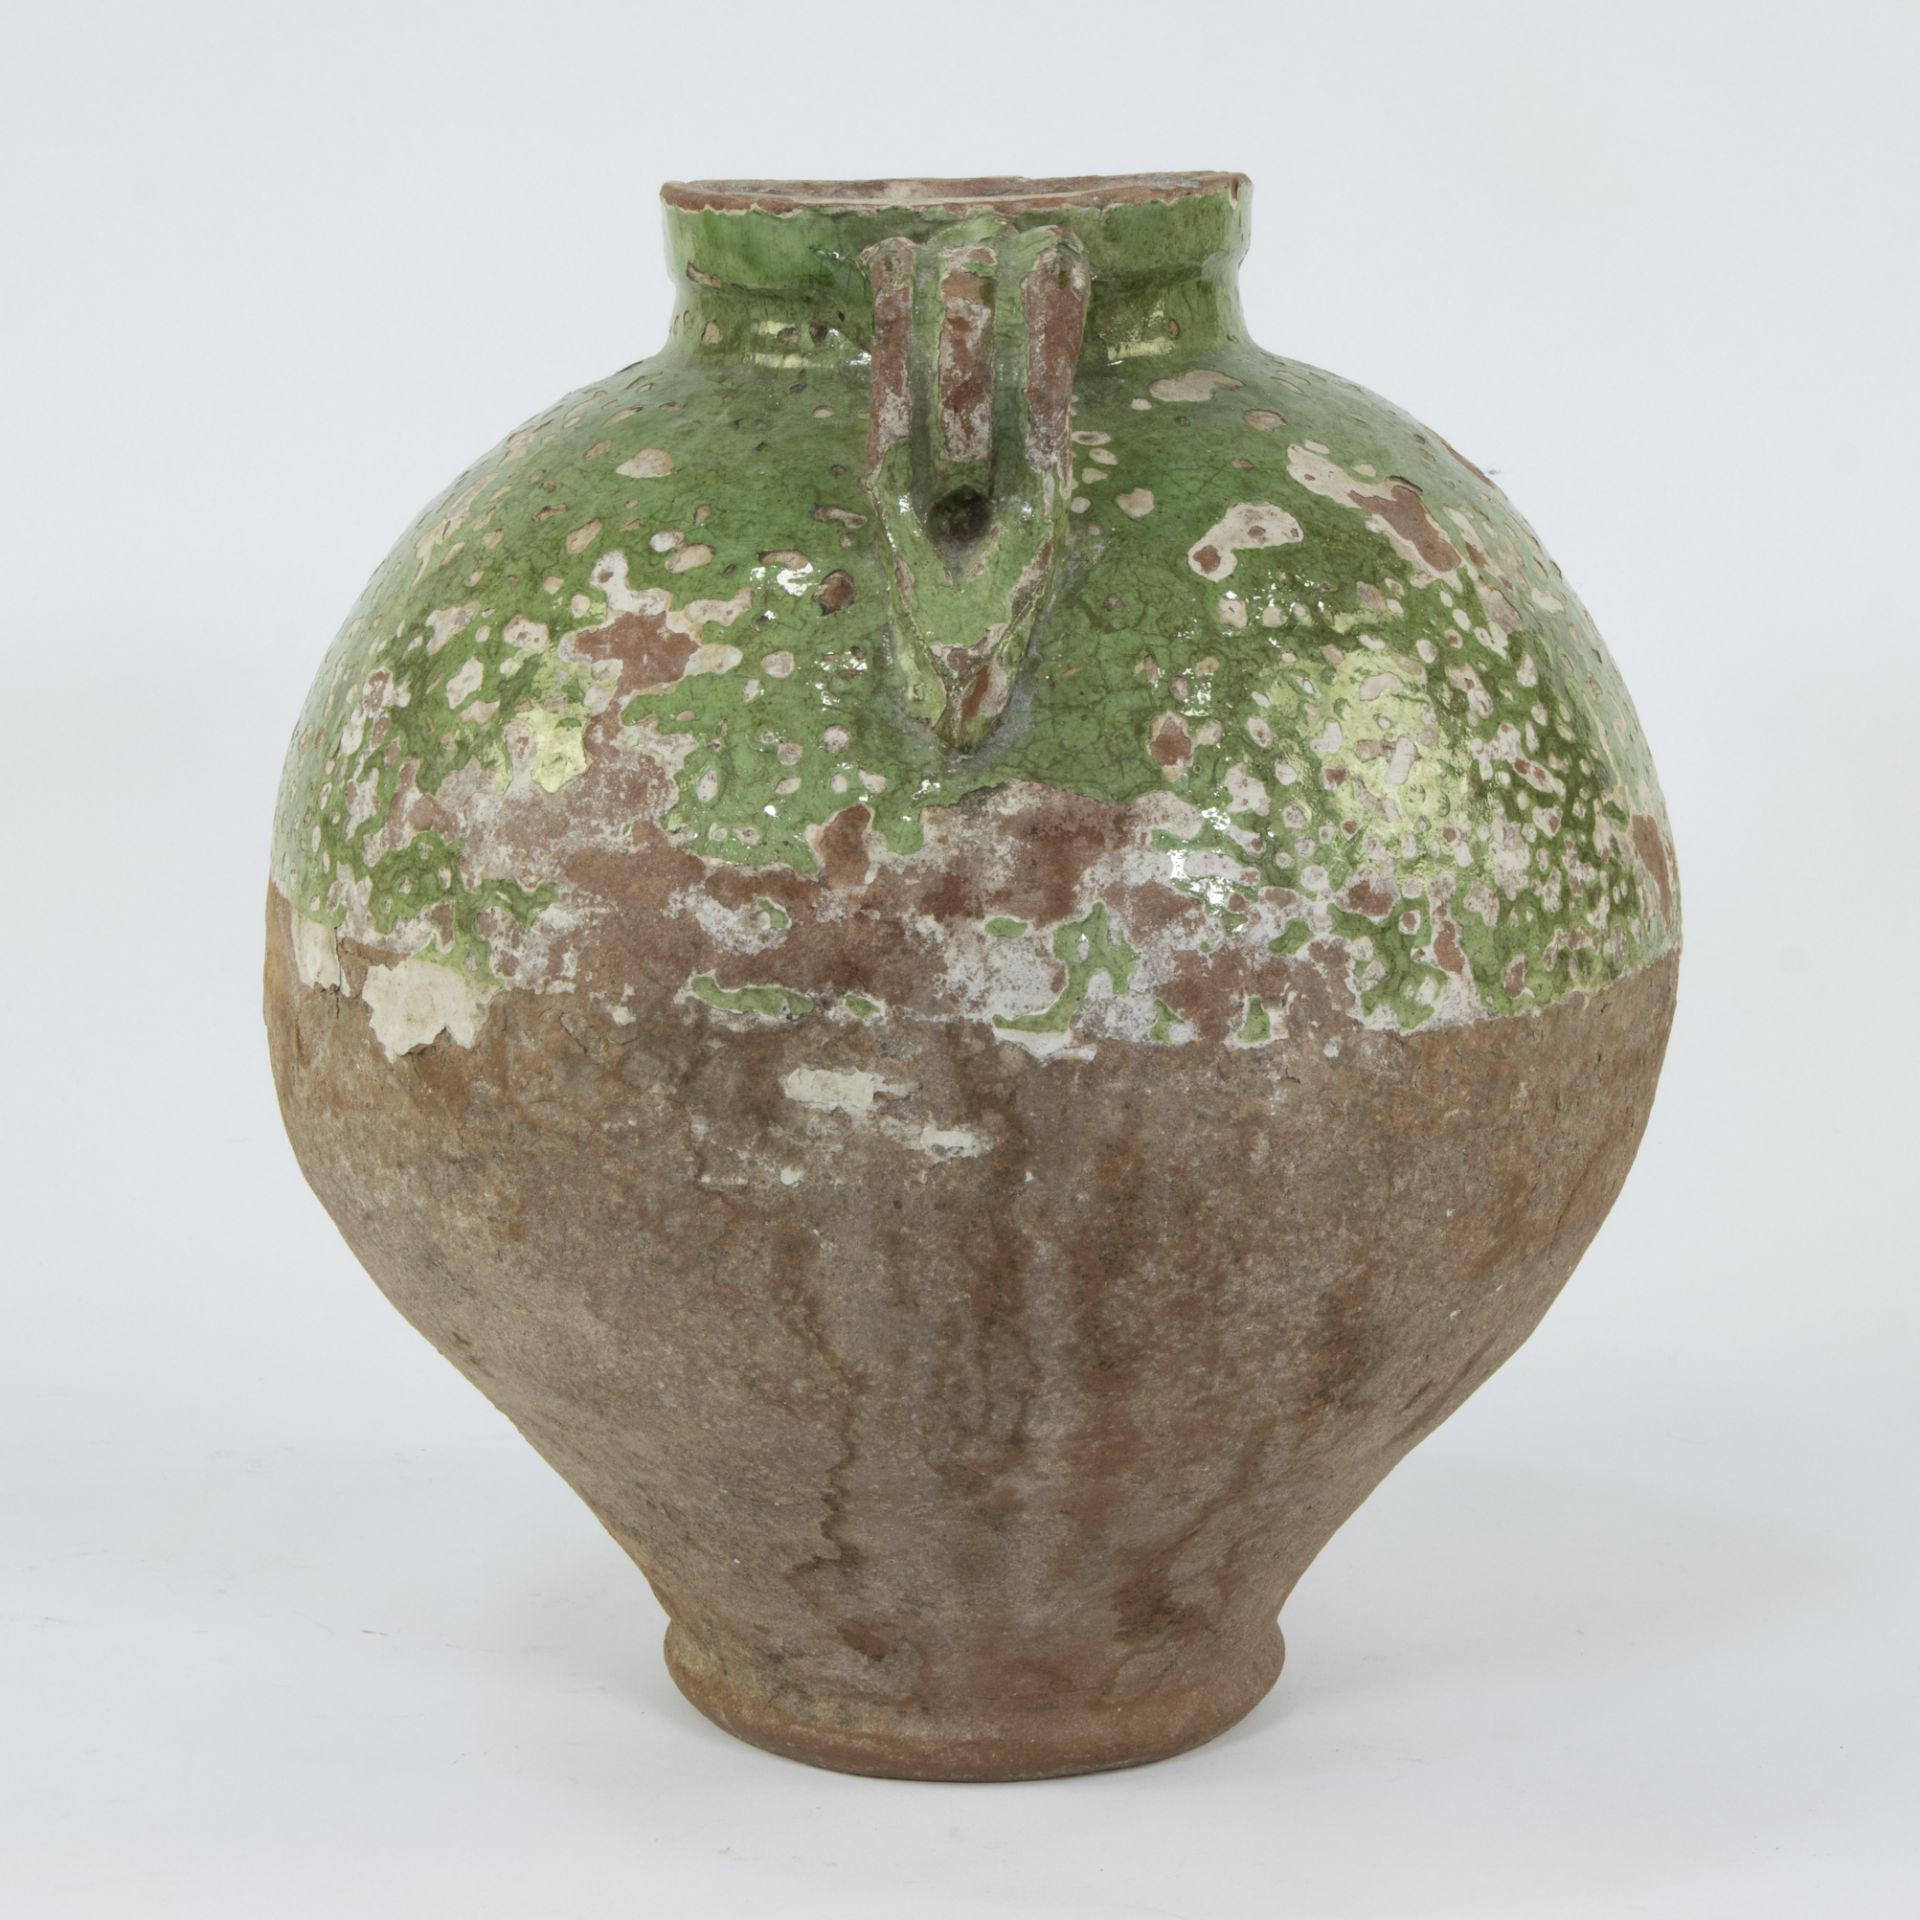 19th century French glazed terracotta jug - Image 2 of 5